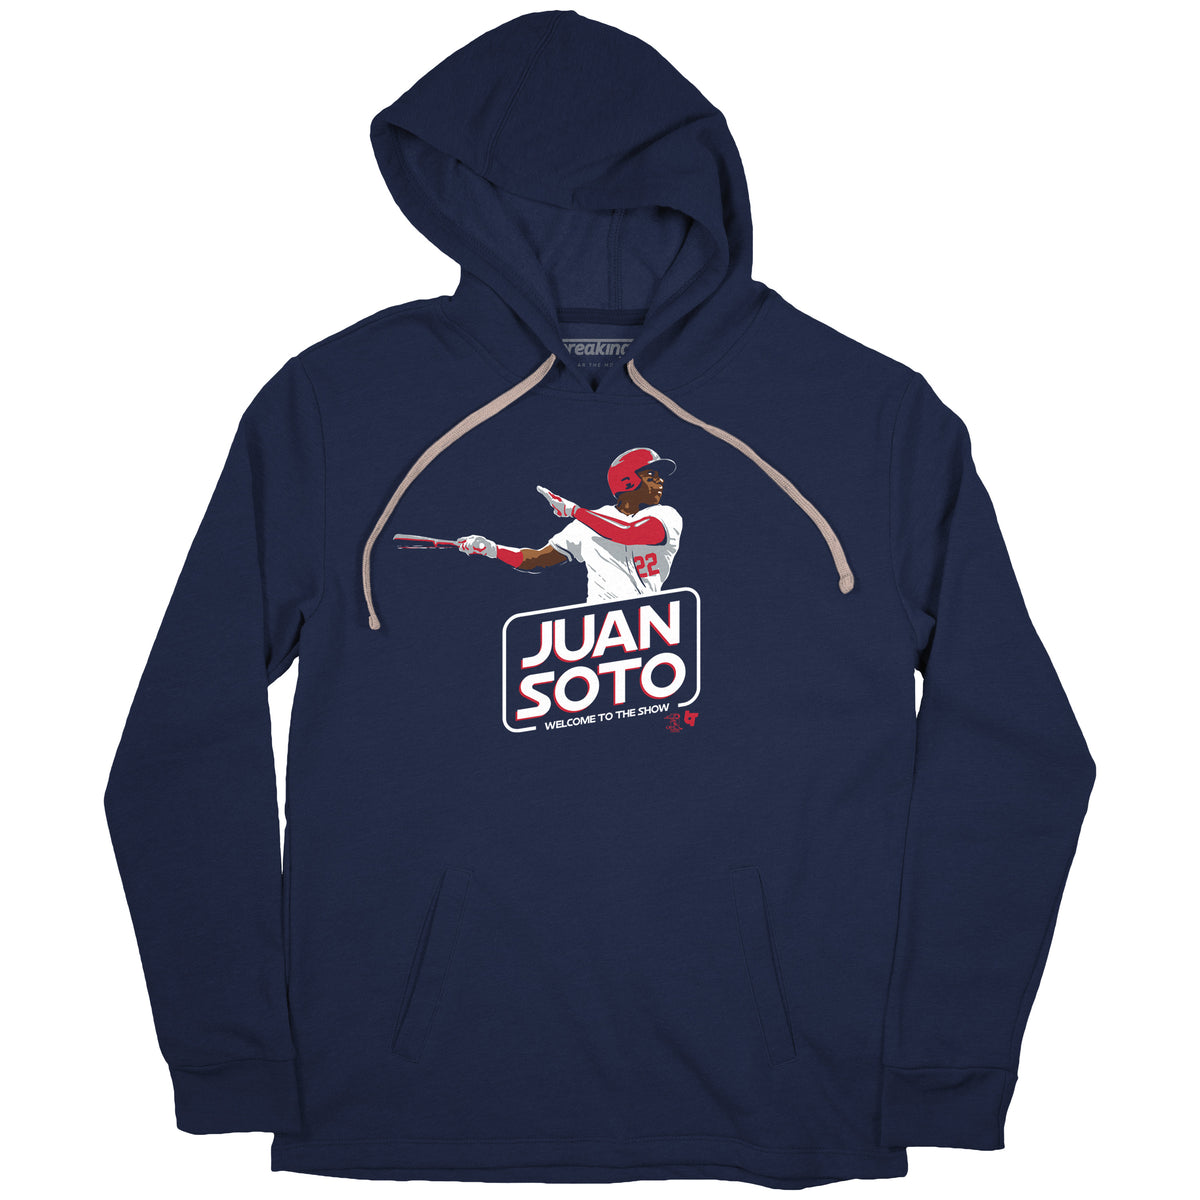 Juan Soto Shirt, Welcome To The Show - BreakingT